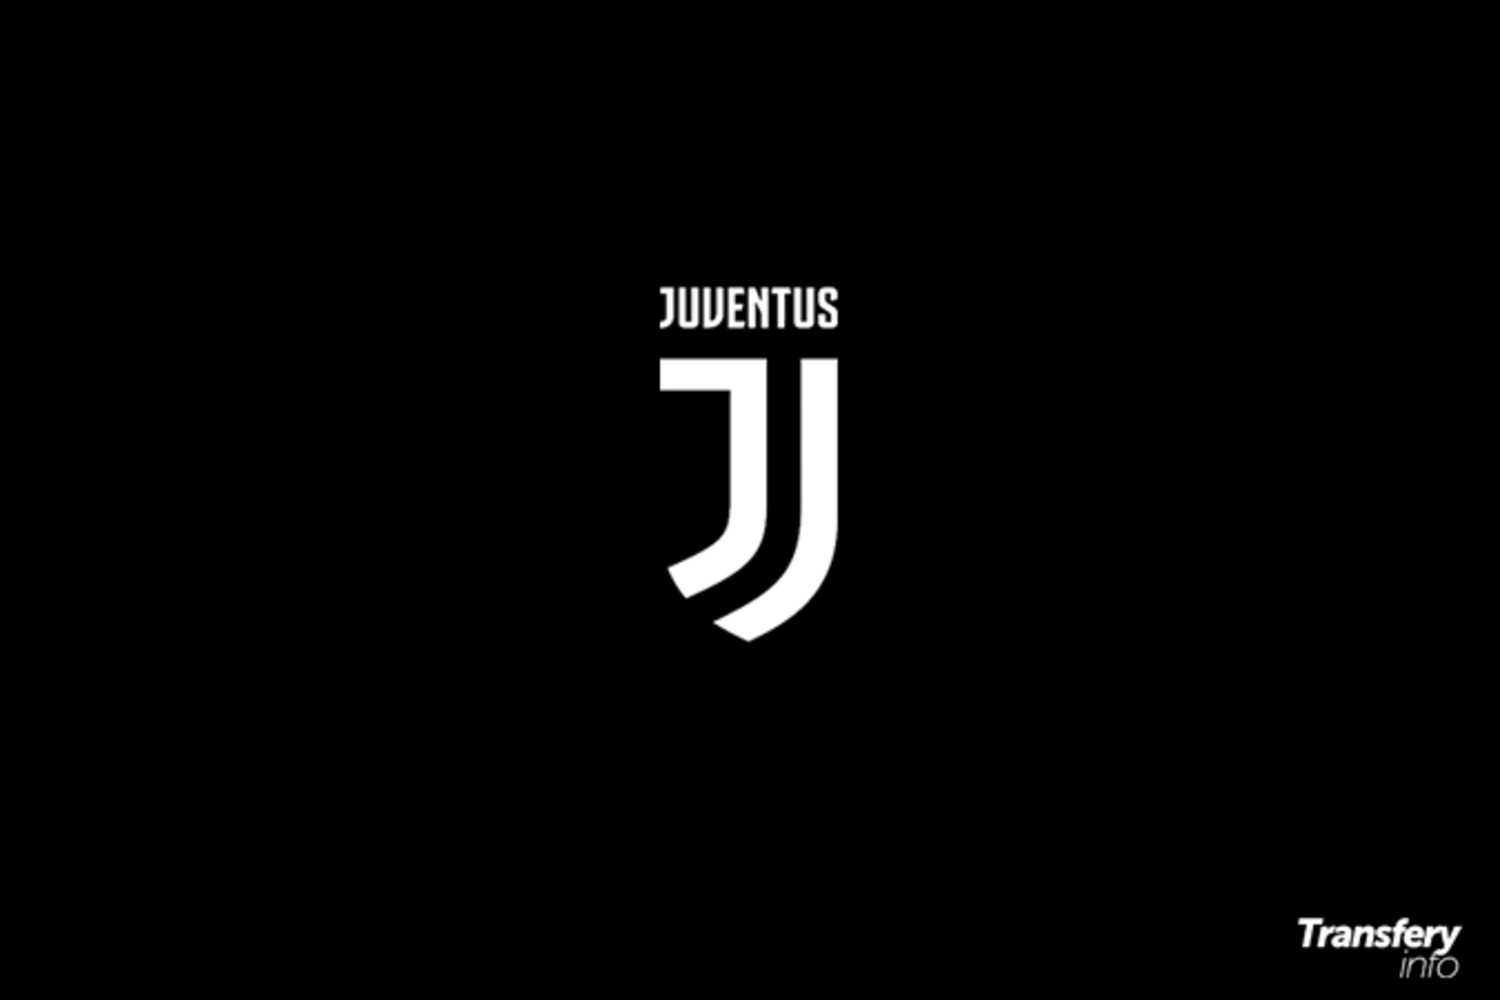 Juventus wygrał walkę o argentyński talent. Matías Soulé o krok od transferu!